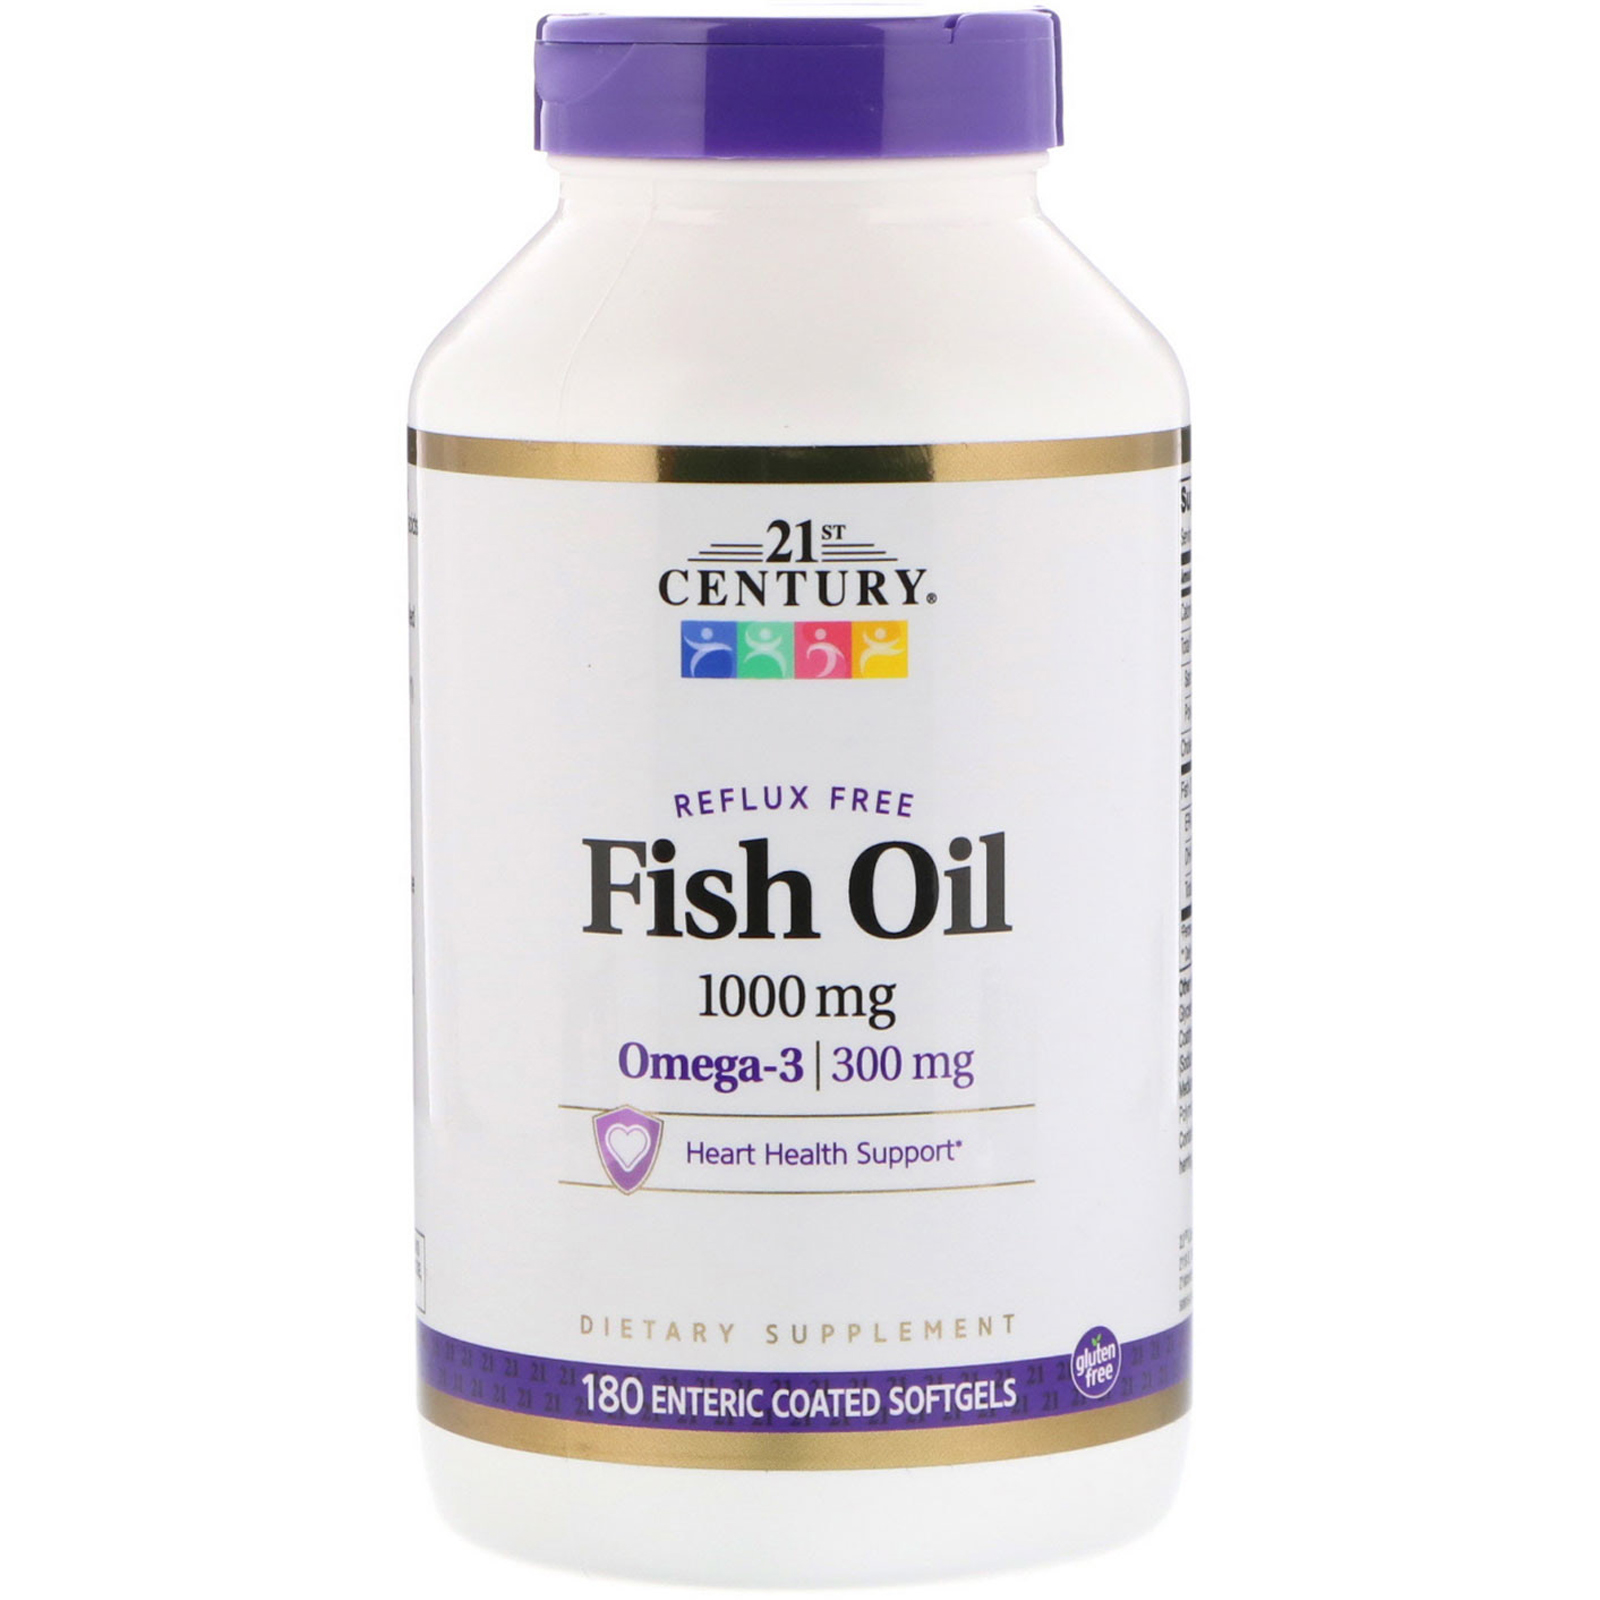 21st century fish oil 1000mg